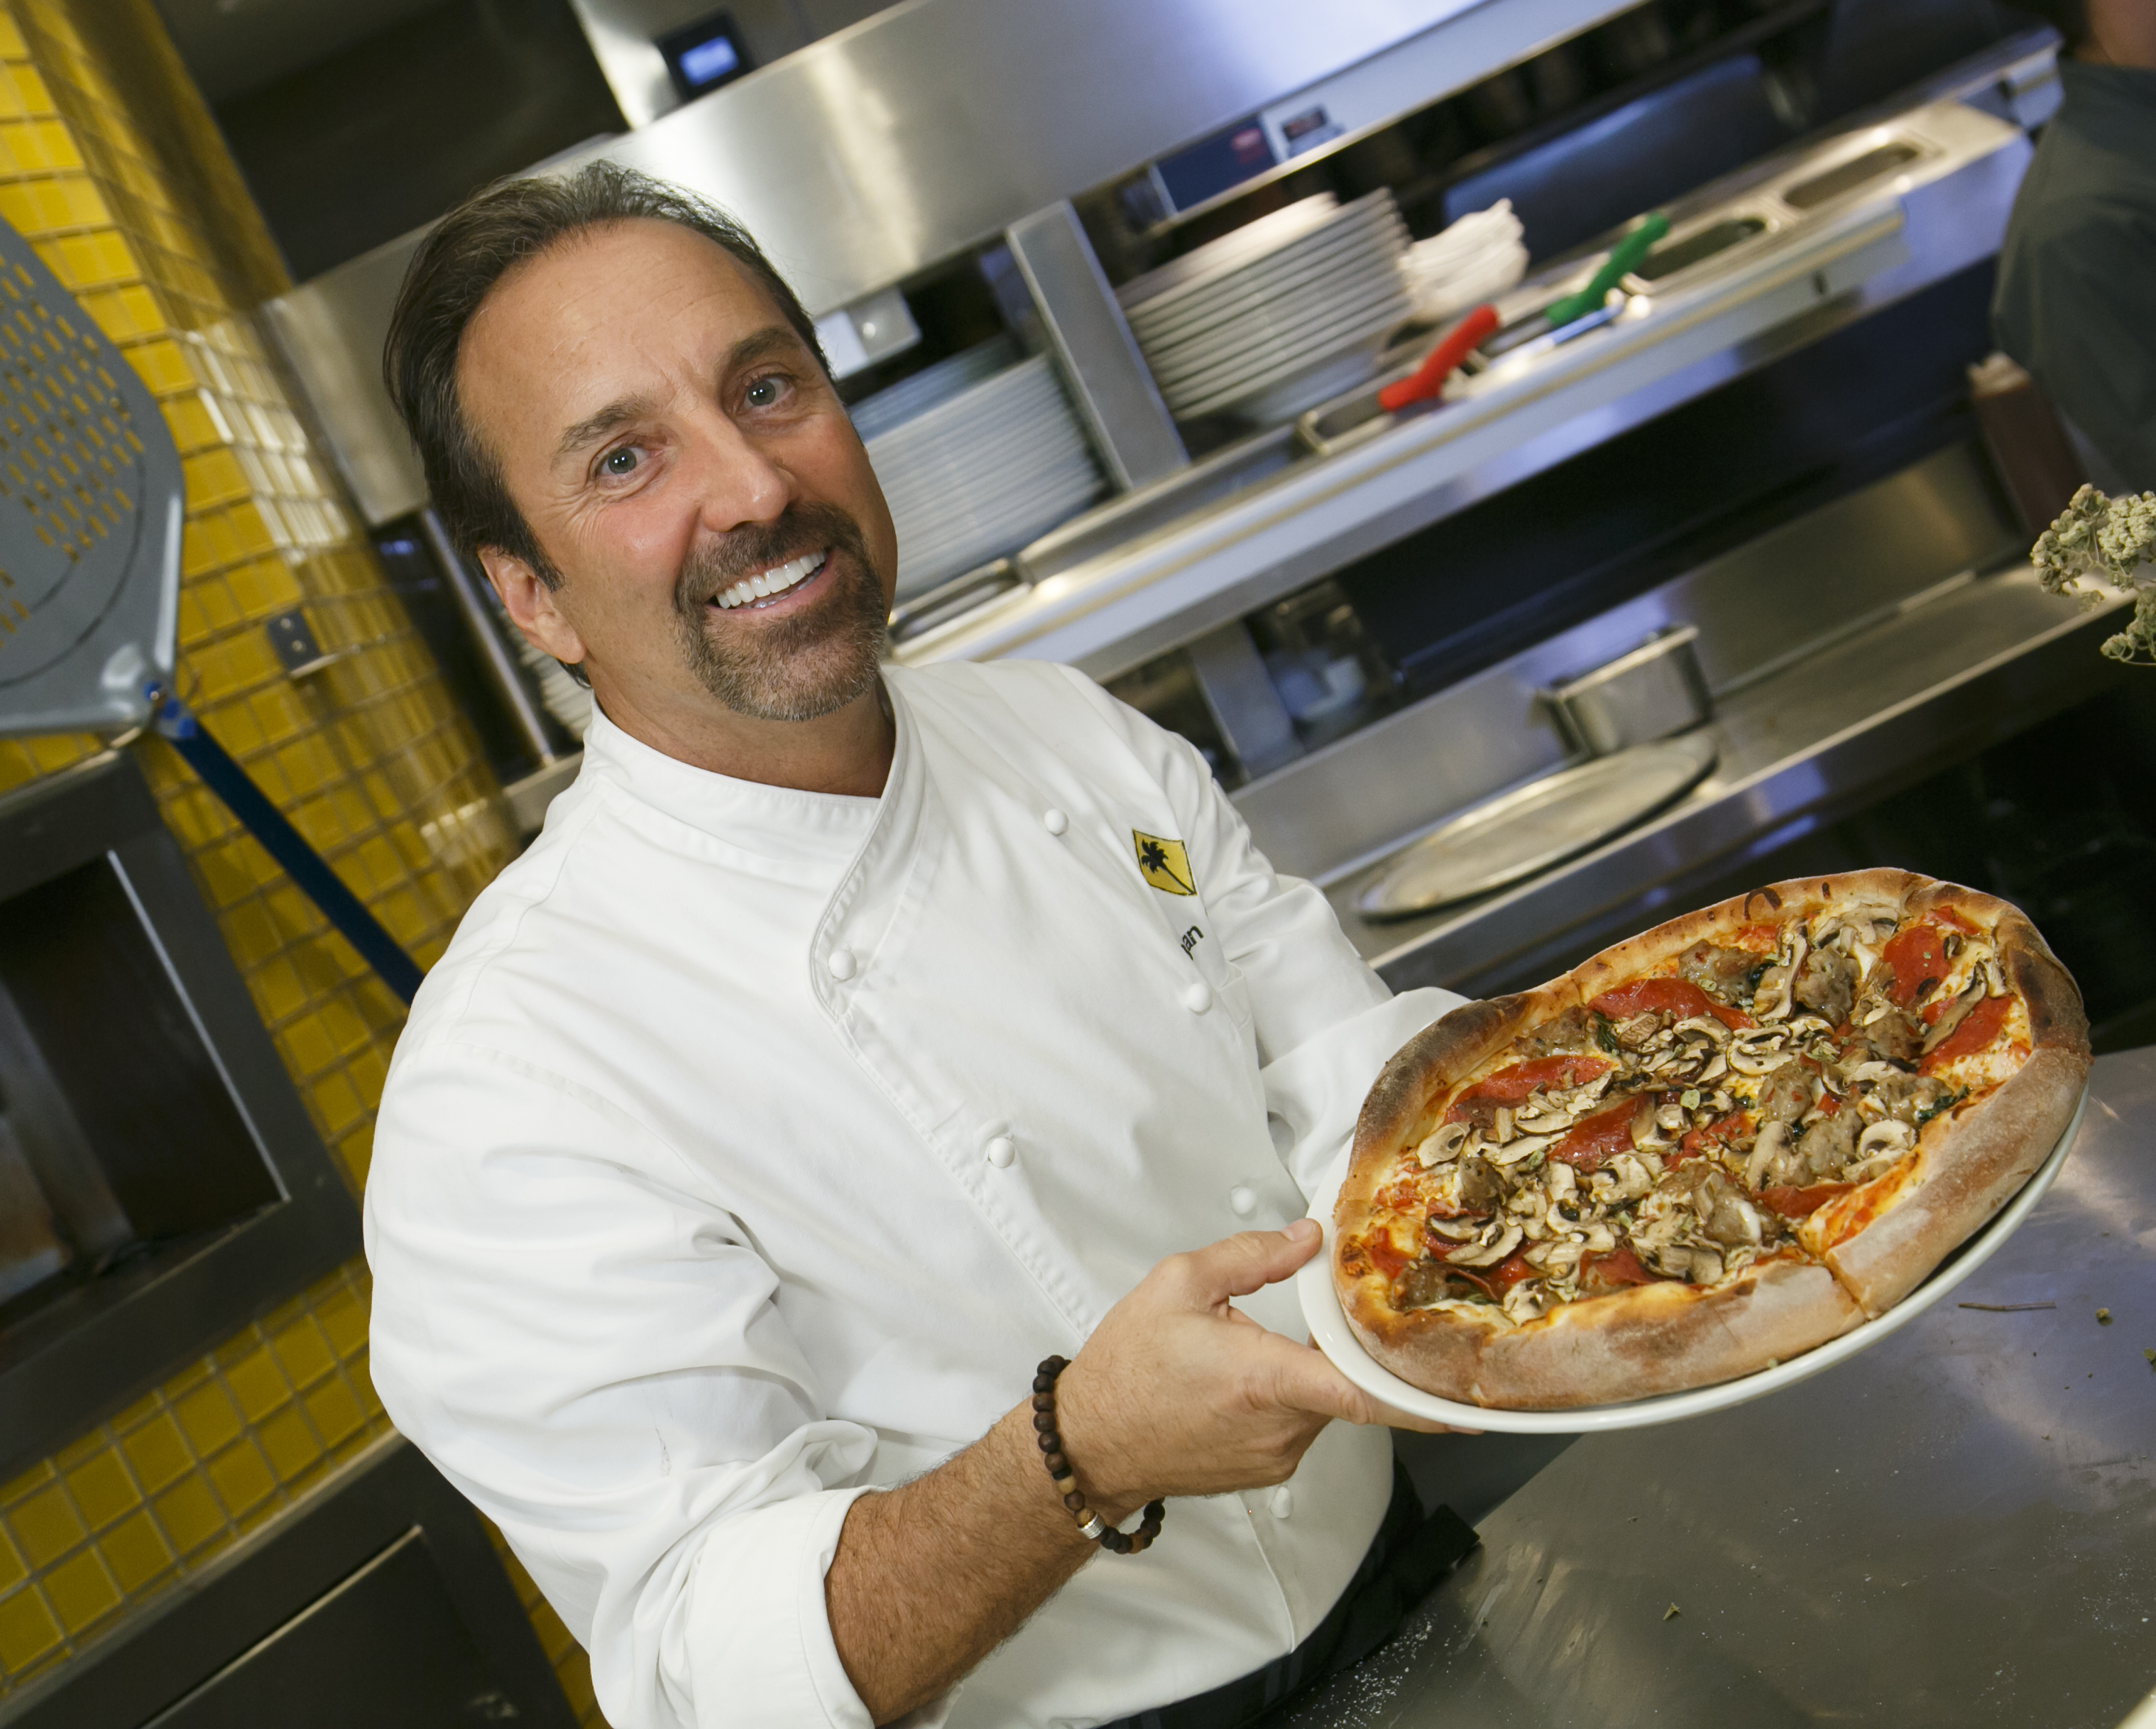 California Pizza Kitchen at Lenox Square, Lenox Square is t…